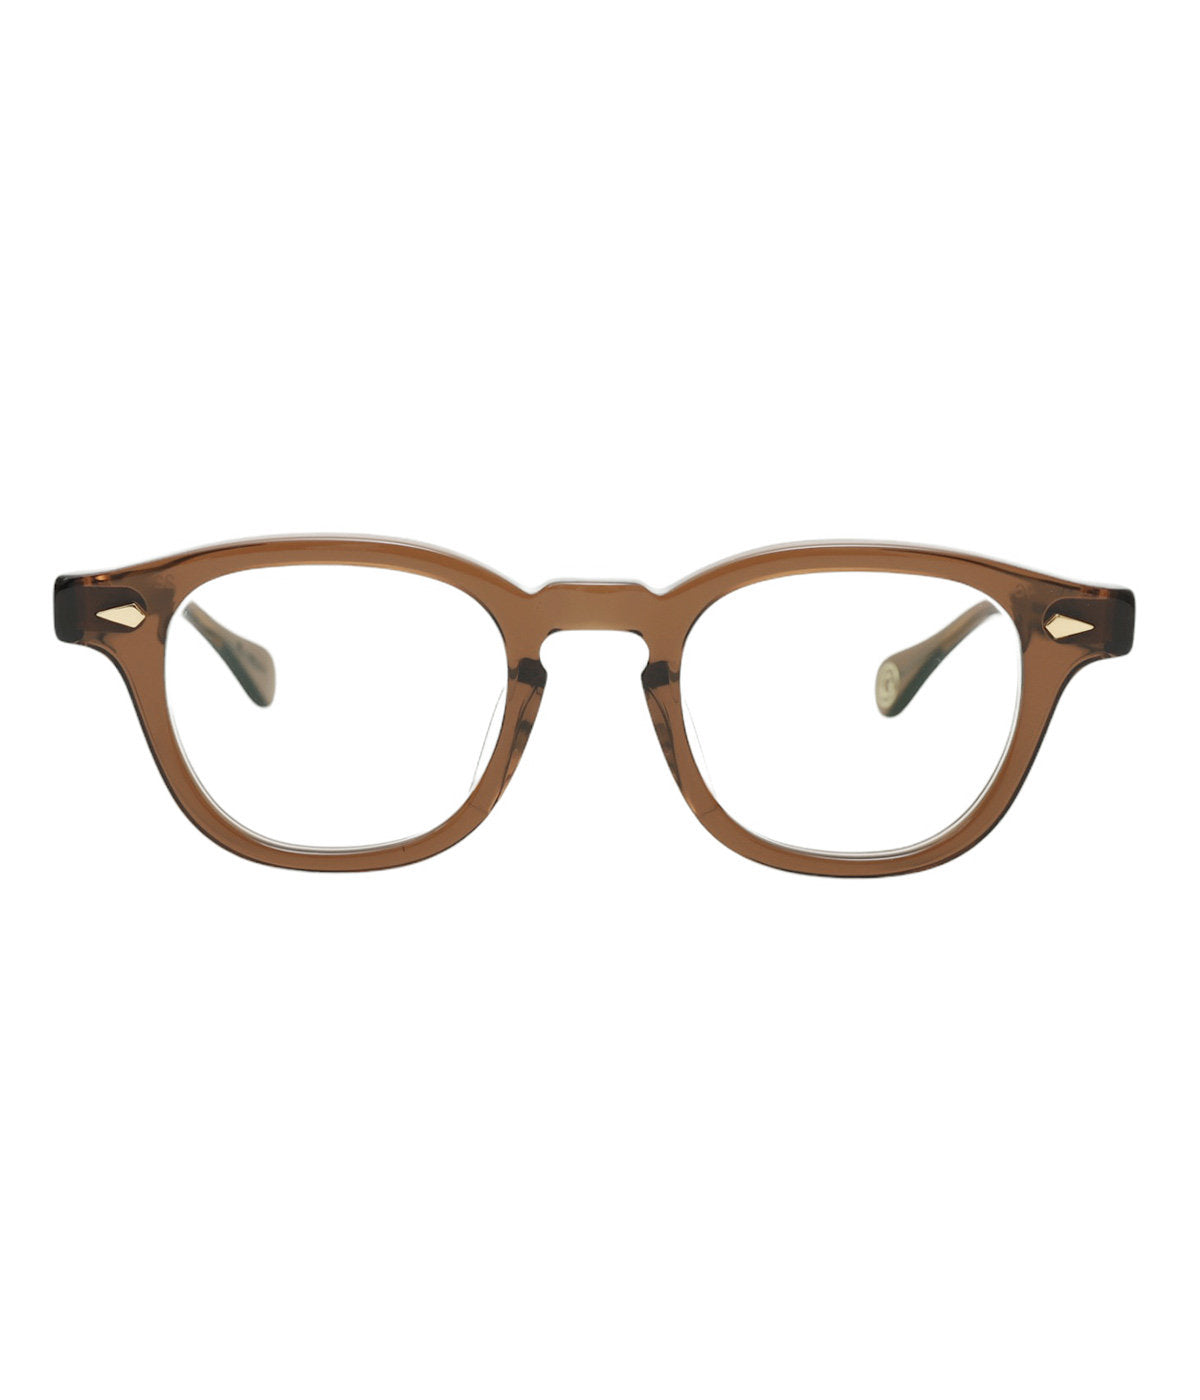 JULIUS TART OPTICAL AR Gold Edition Eyeglass Frame Red Brown